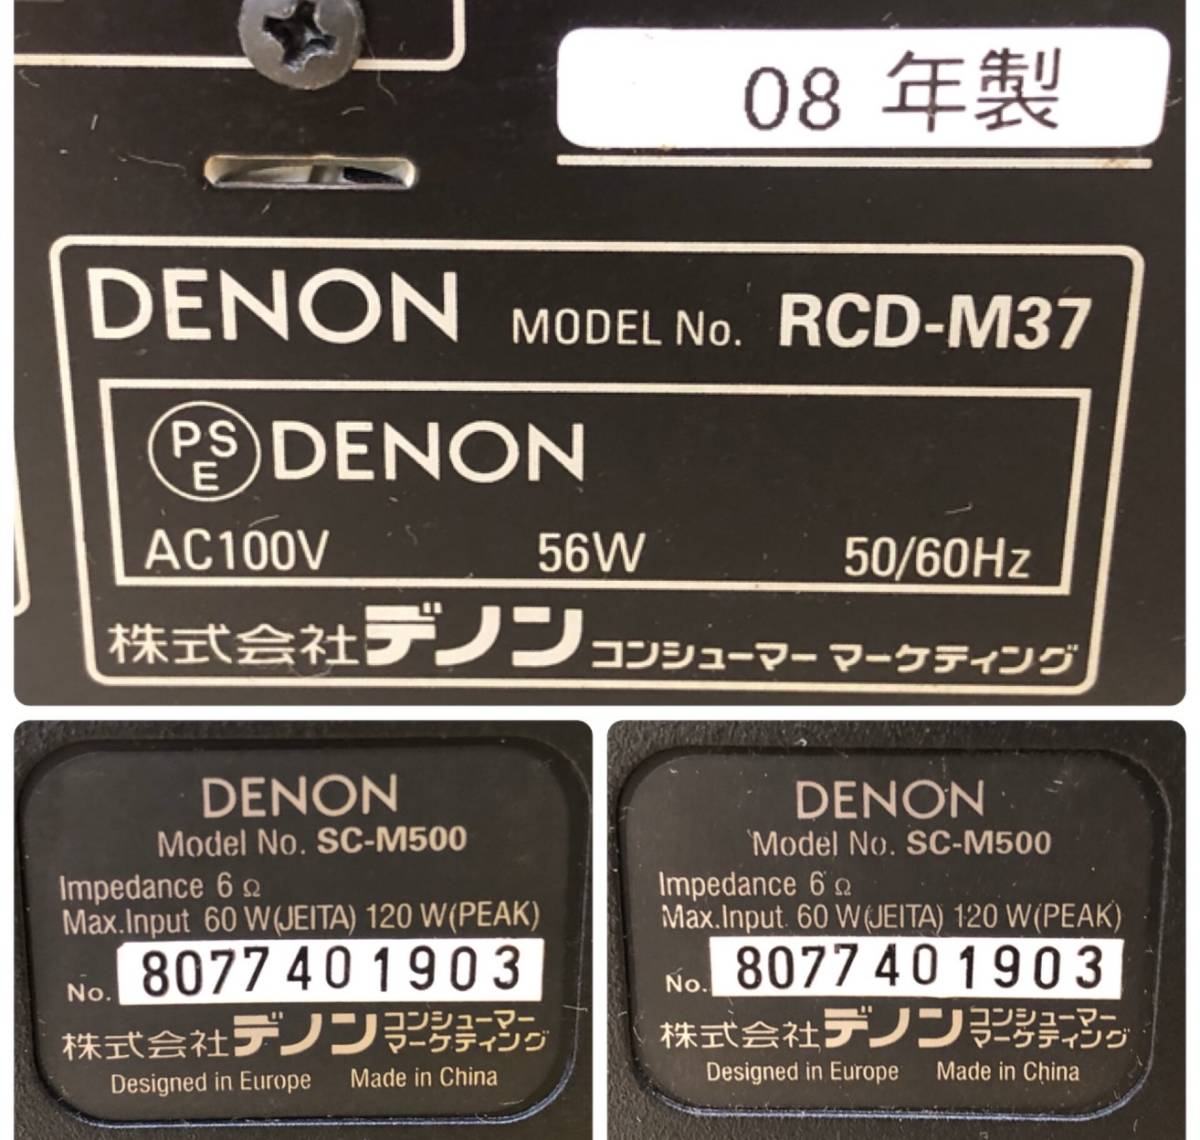 L271951(063)-330/KH3000[ Nagoya ]DENON Denon RCD-M37 / SC-M500 / SC-M500 3 point summarize 